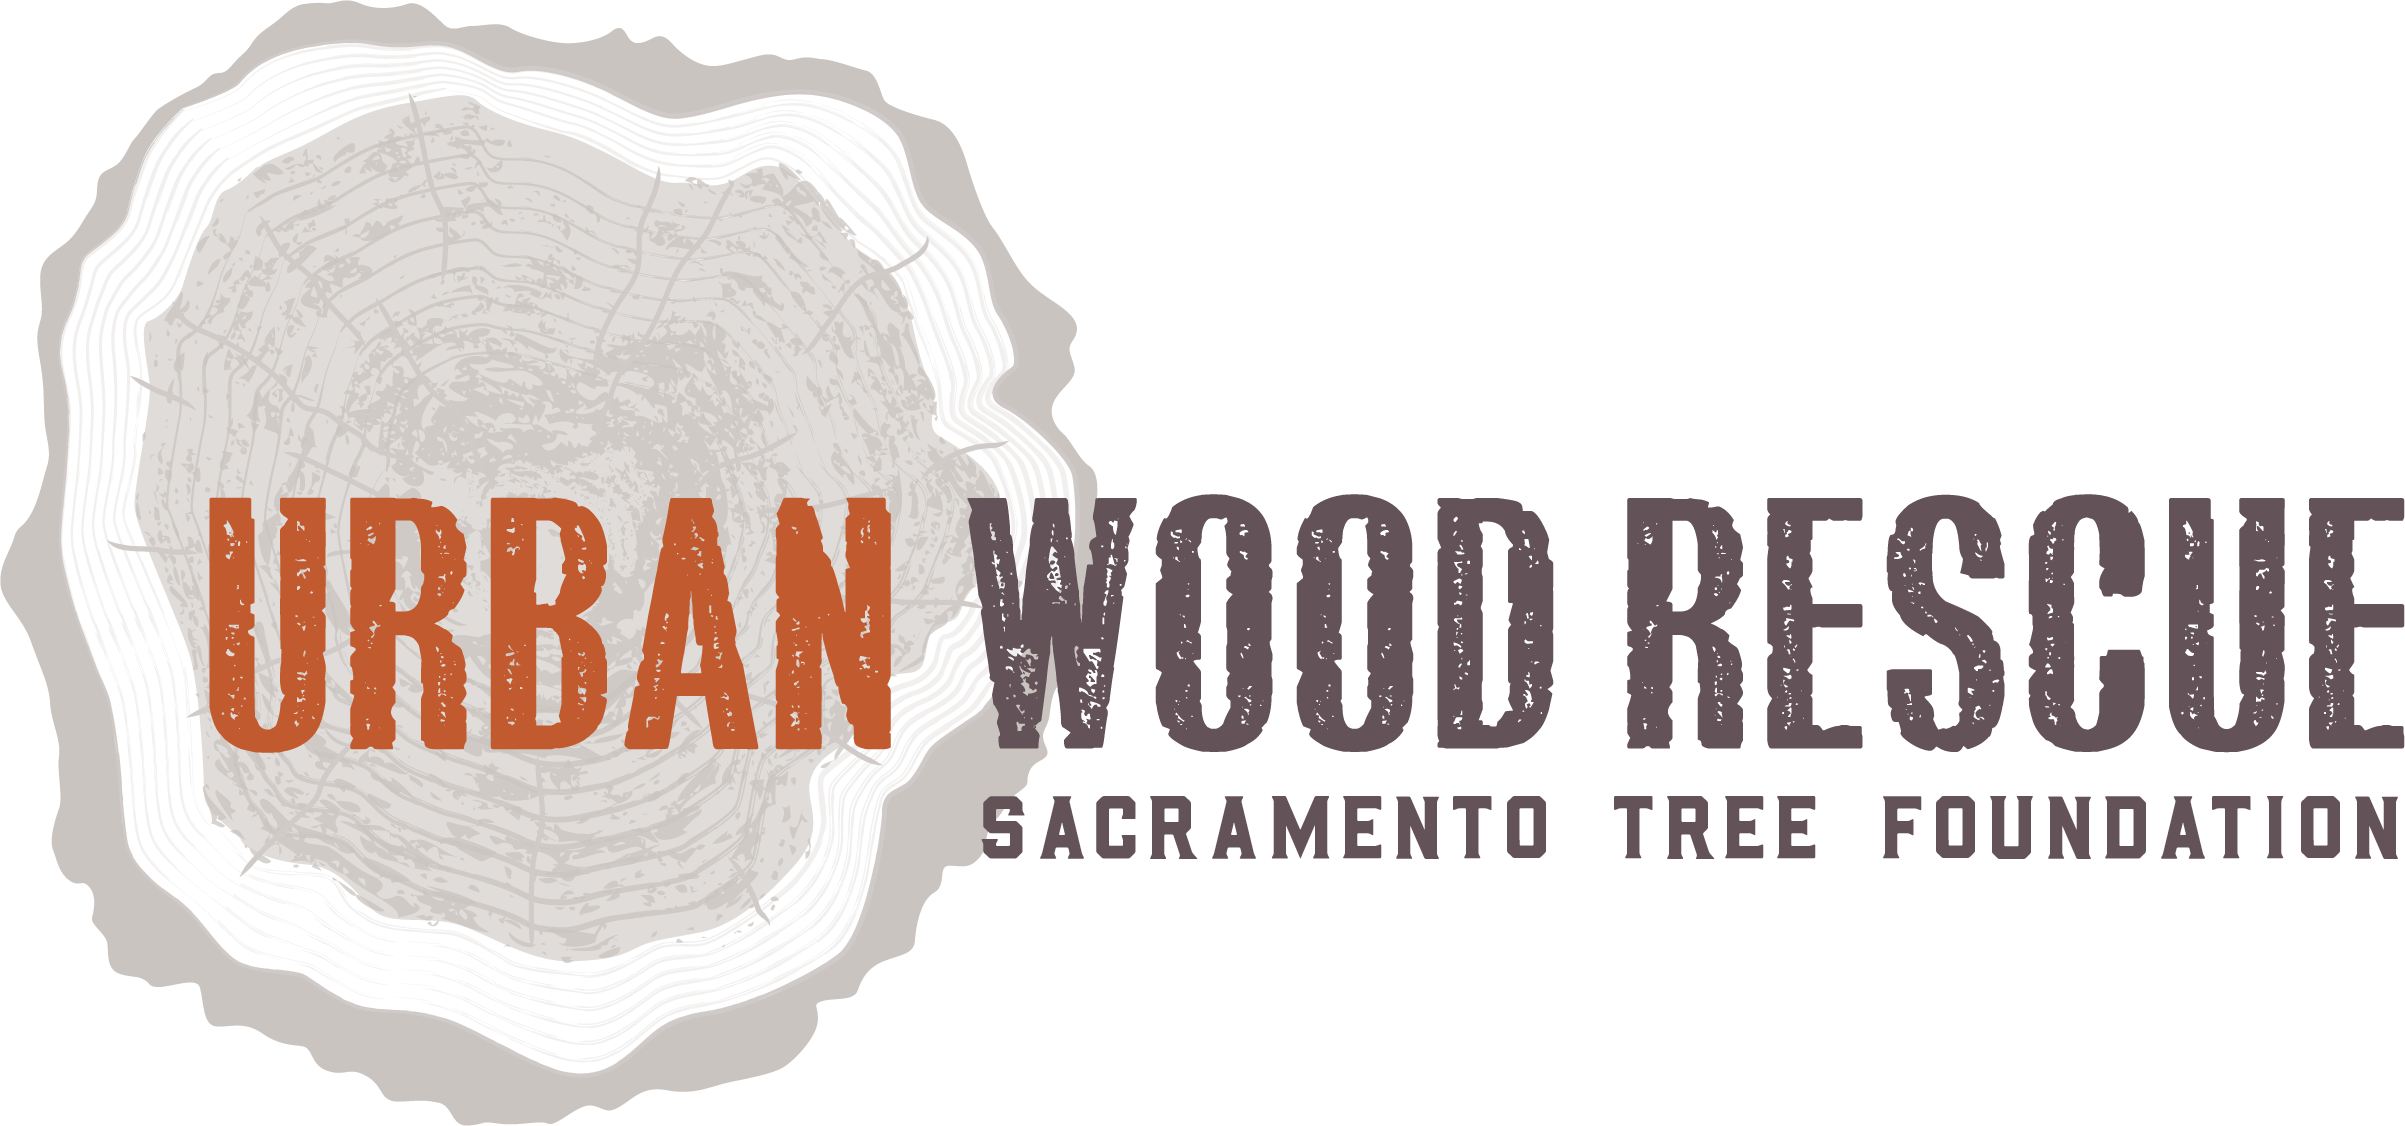 Urban Wood Rescue logo